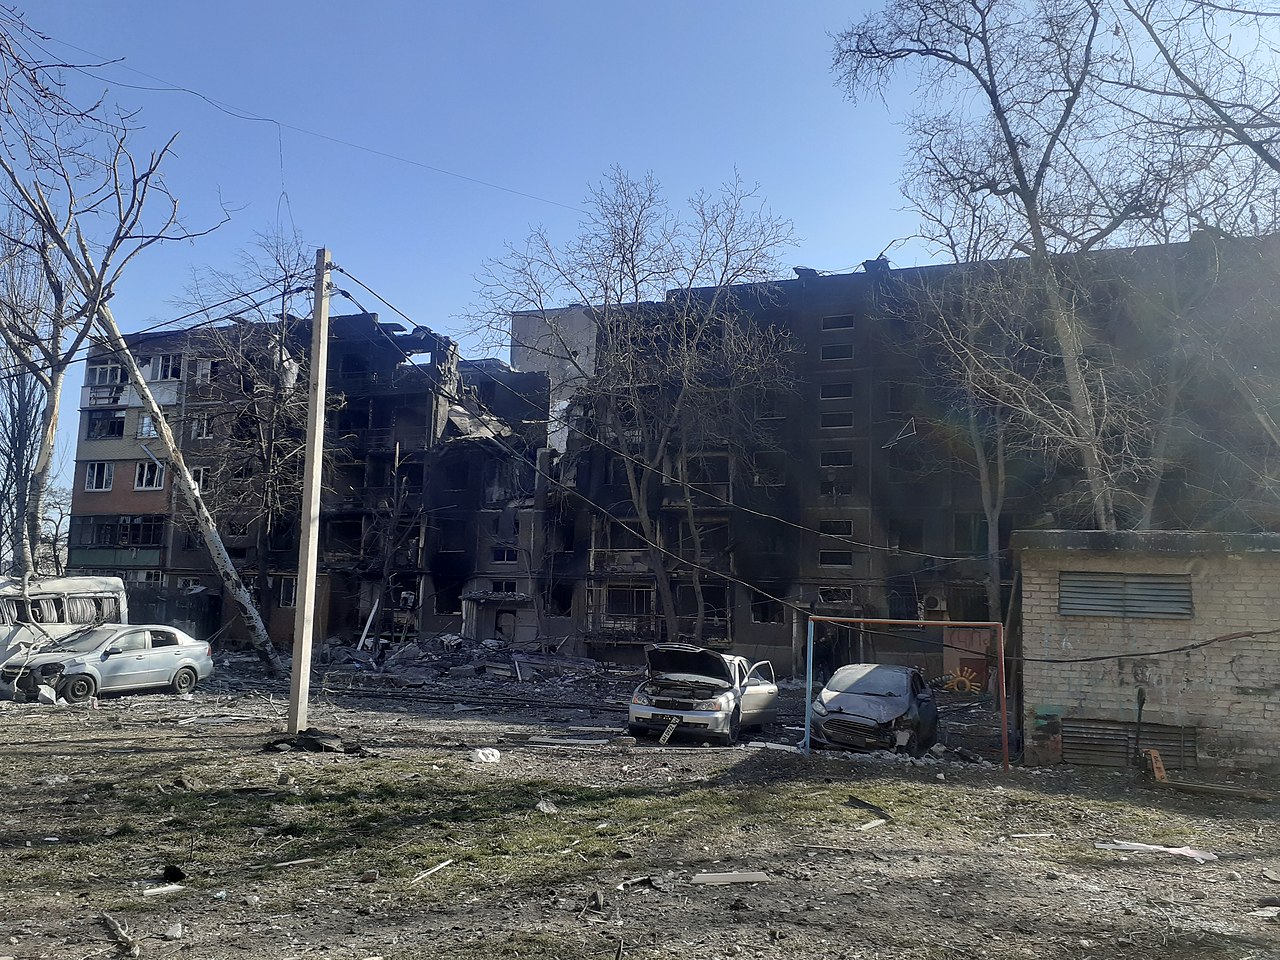 Human rights organizations release report alleging mass civilian casualties during Russia siege of Mariupol, Ukraine